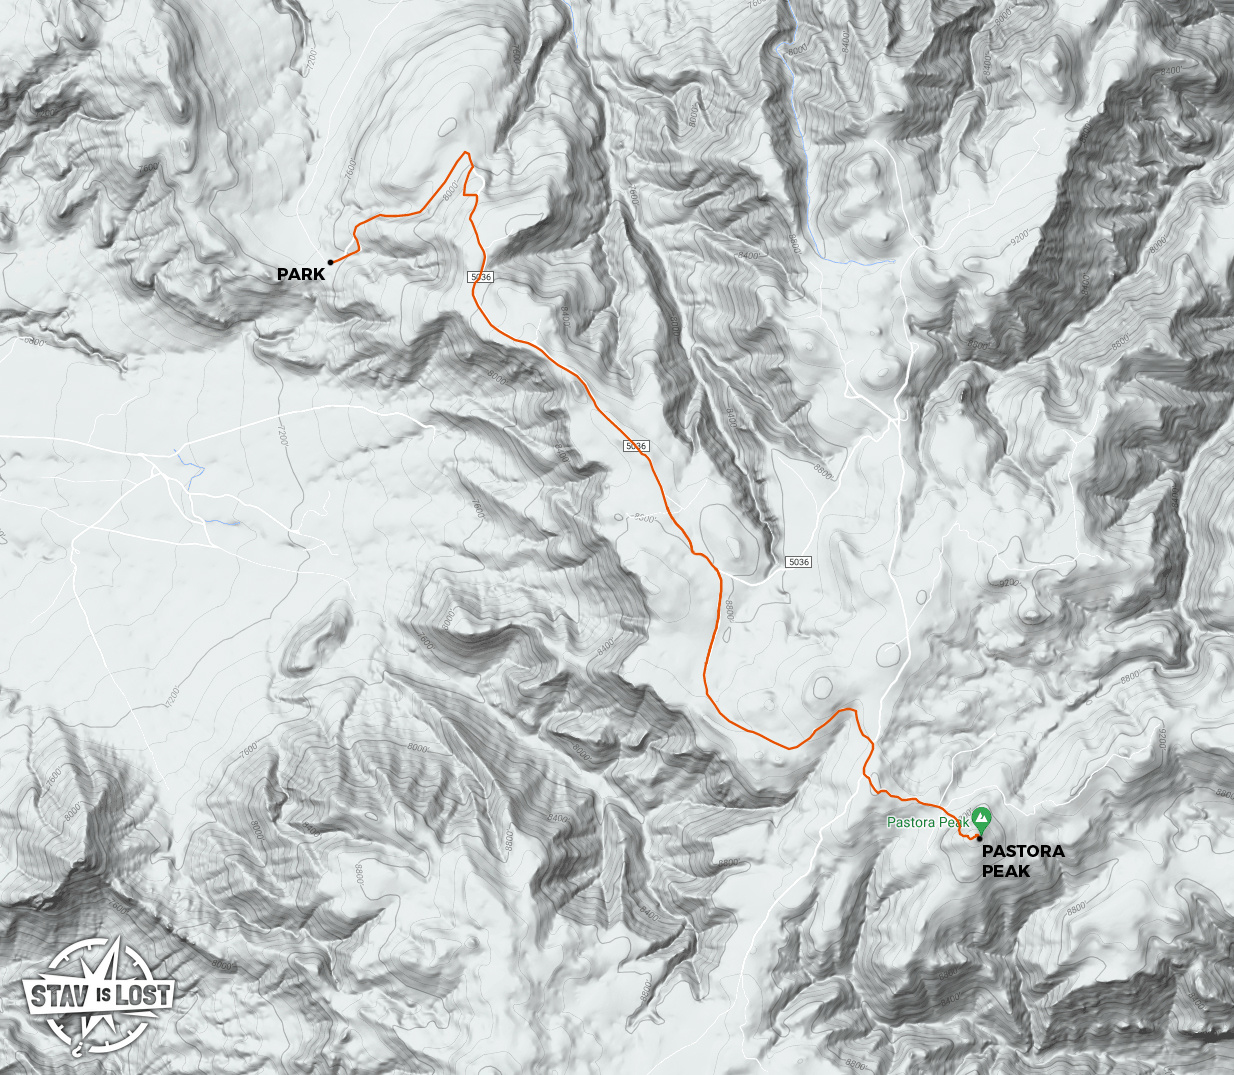 map for Pastora Peak by stav is lost